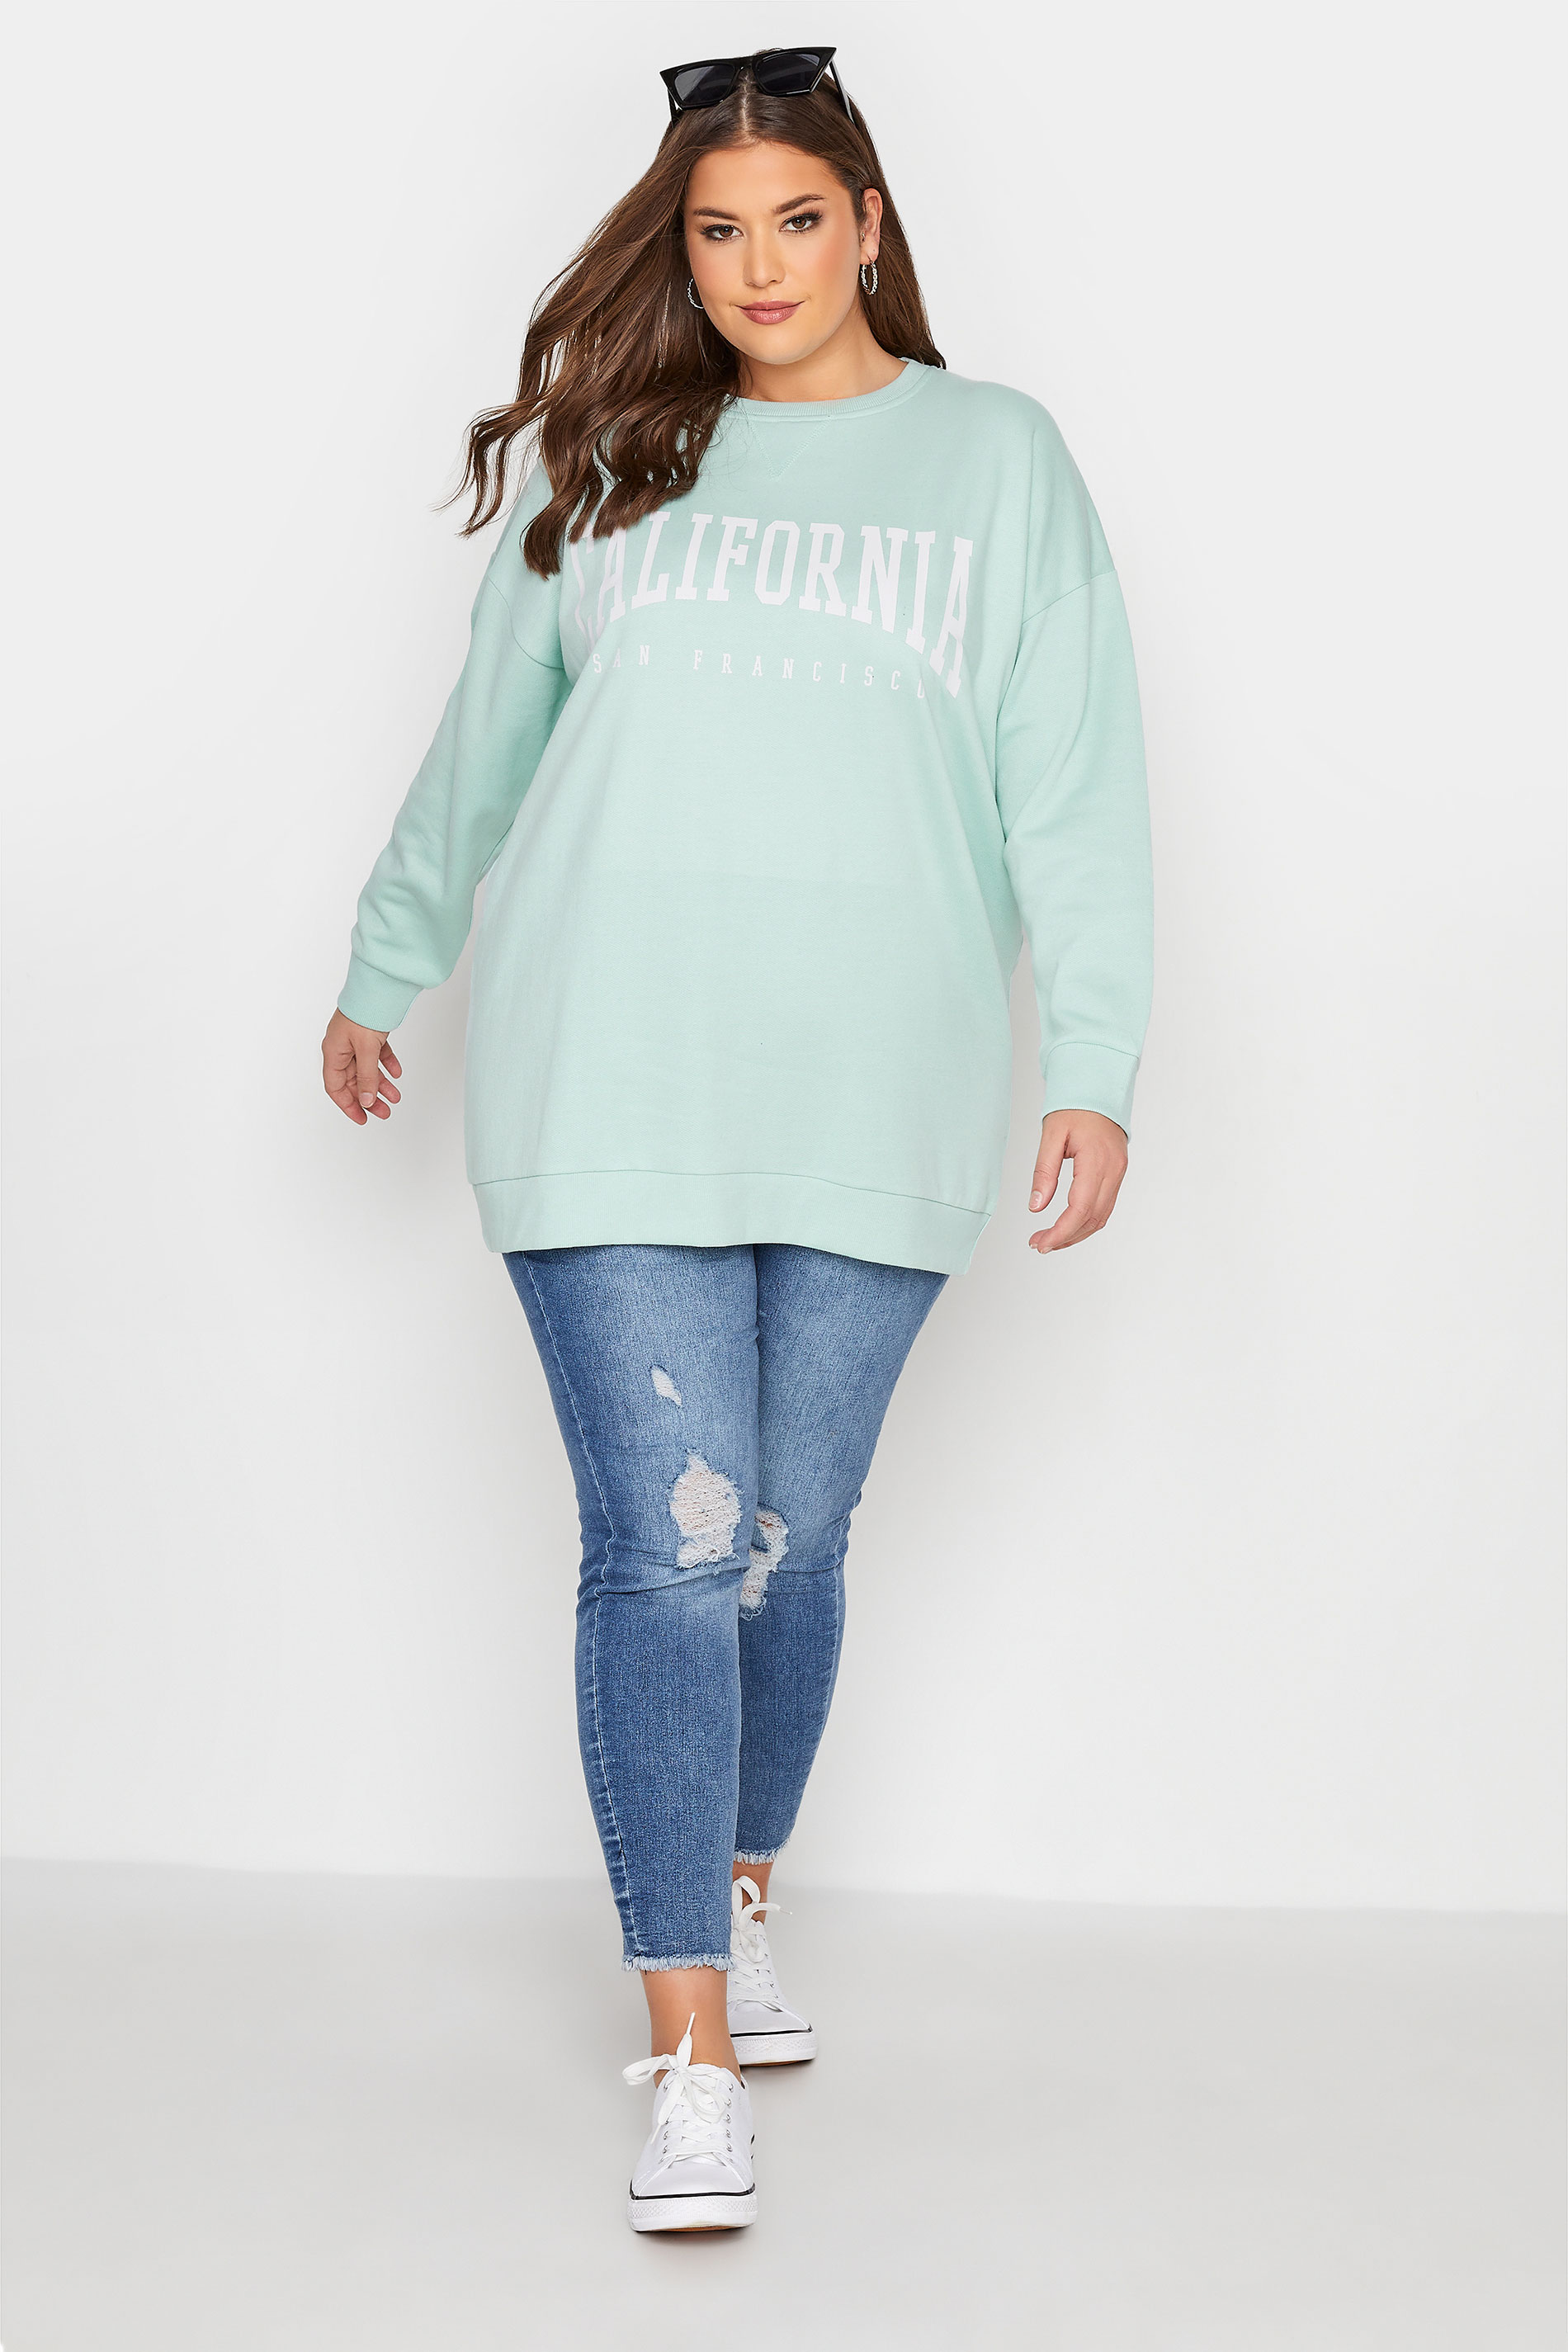 Plus Size Mint Green 'California' Slogan Sweatshirt | Yours Clothing  2